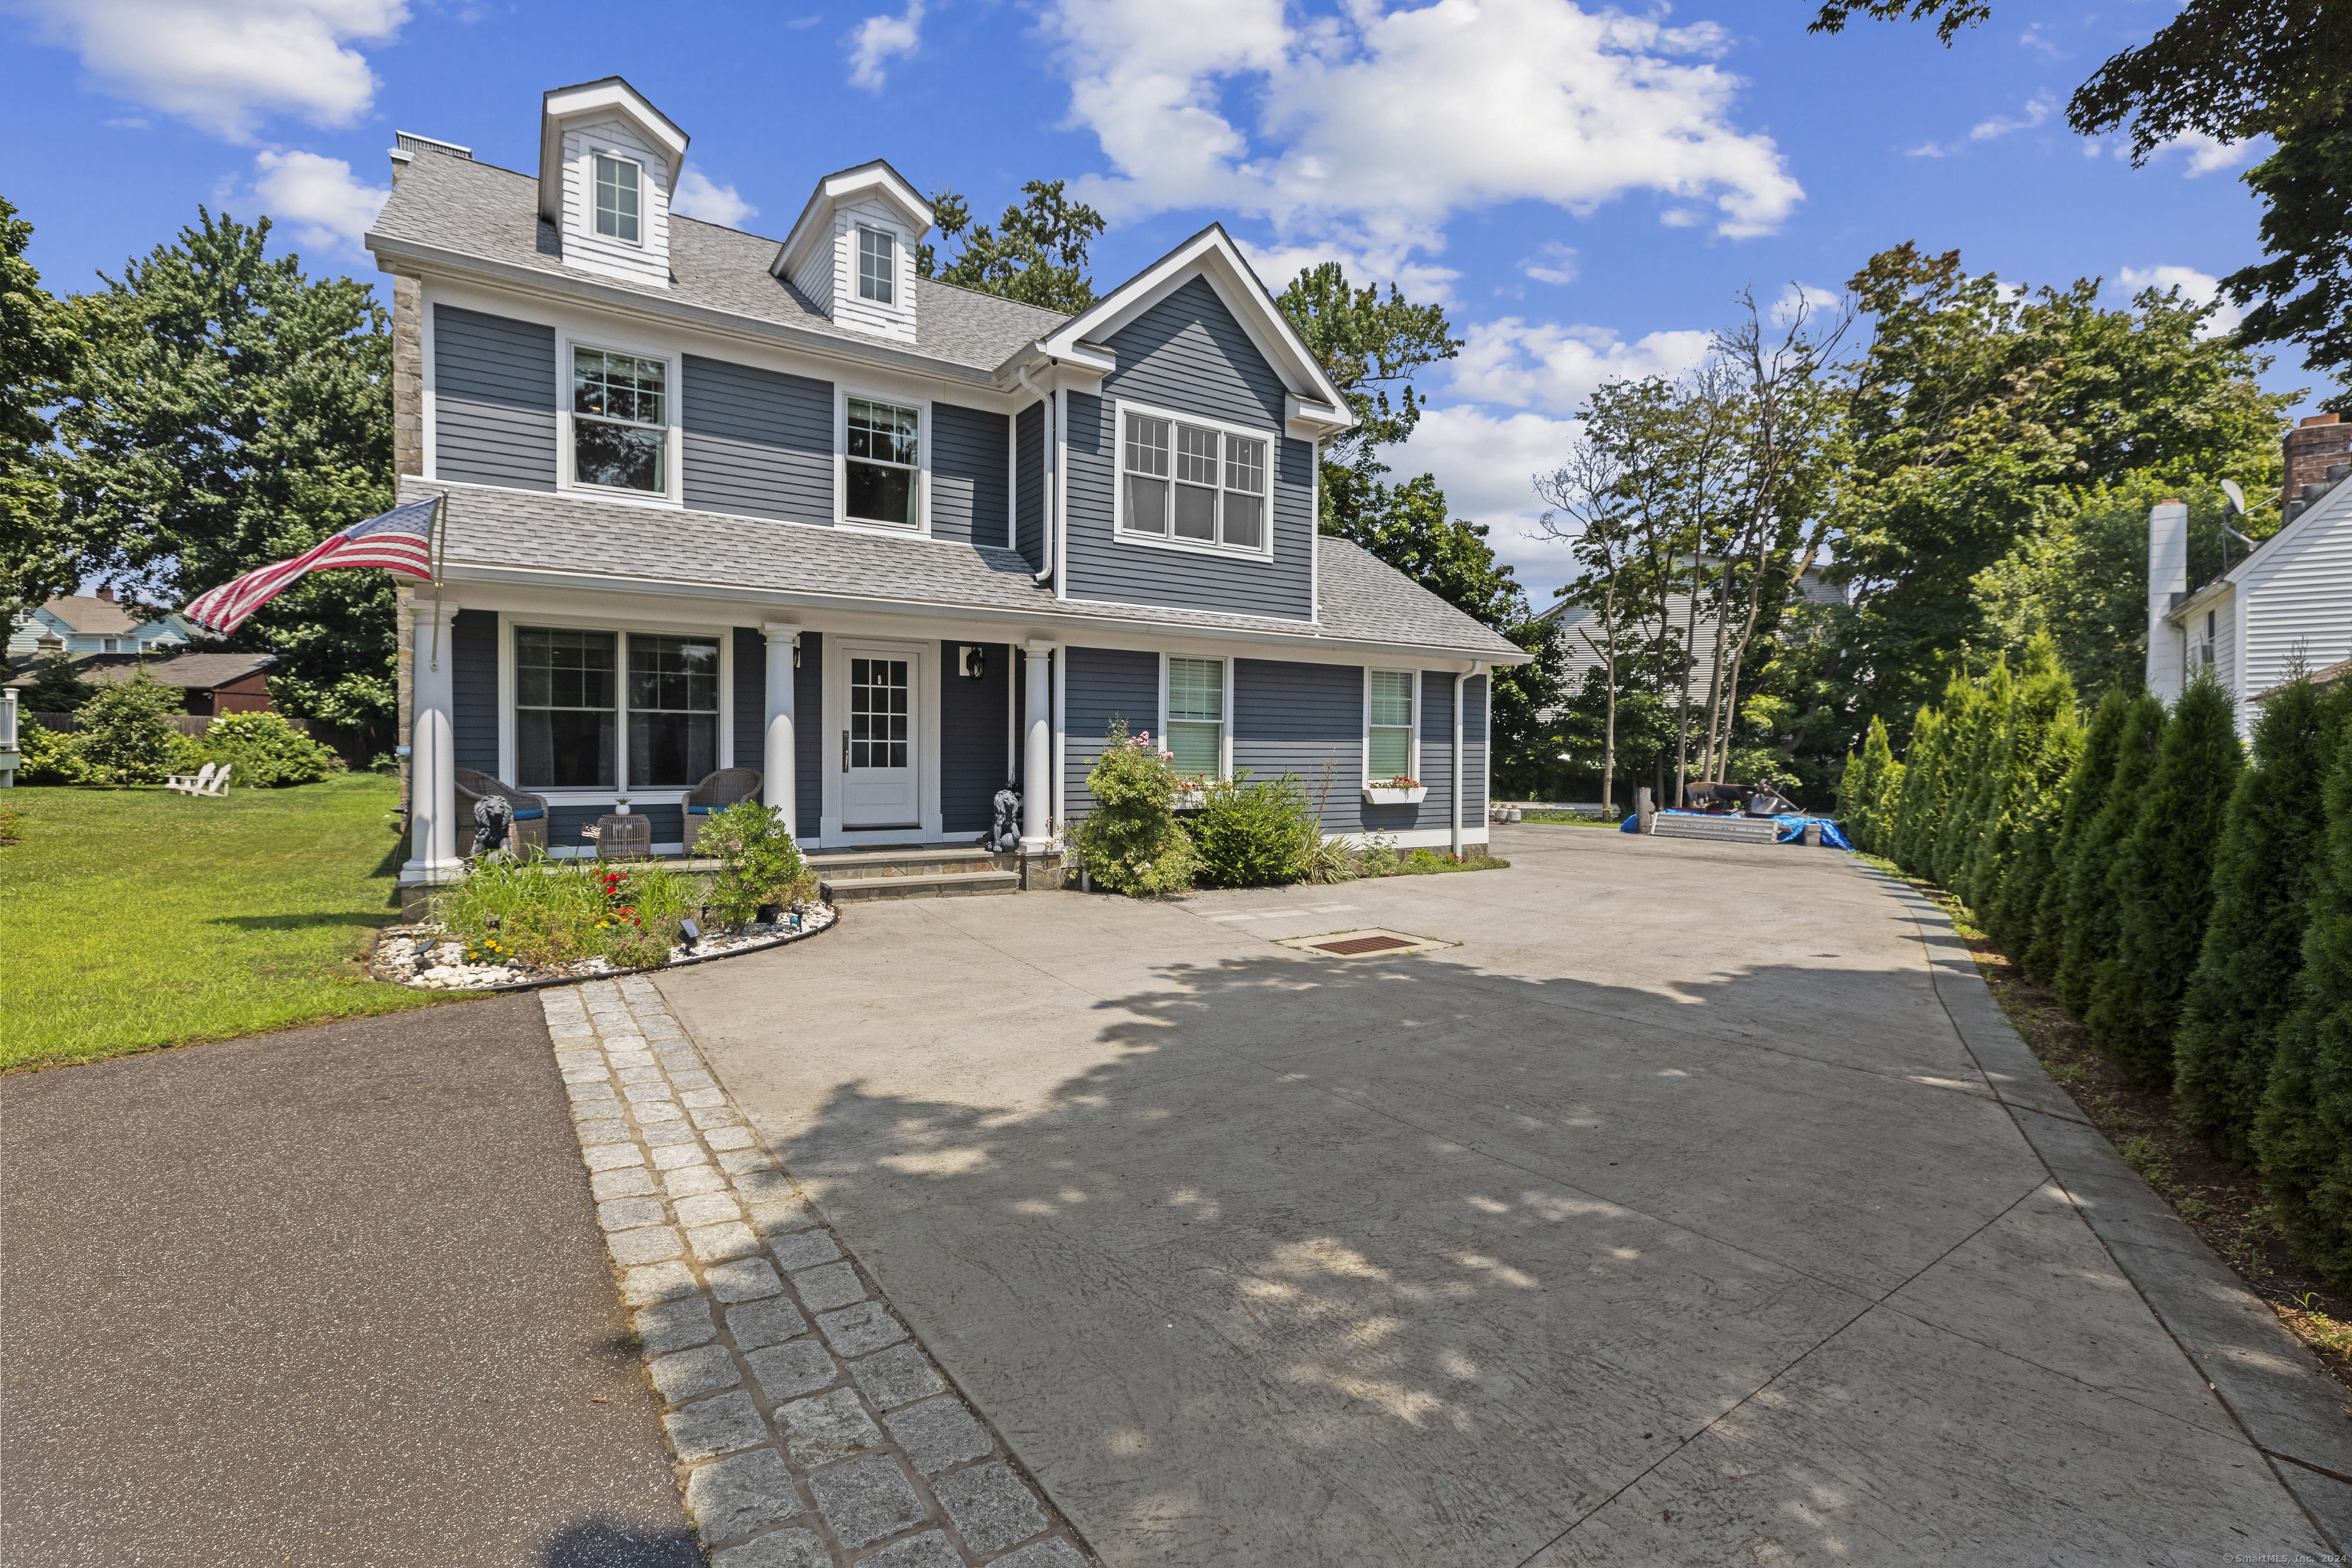 Rental Property at 328 Brewster Street, Bridgeport, Connecticut - Bedrooms: 4 
Bathrooms: 3 
Rooms: 9  - $6,500 MO.